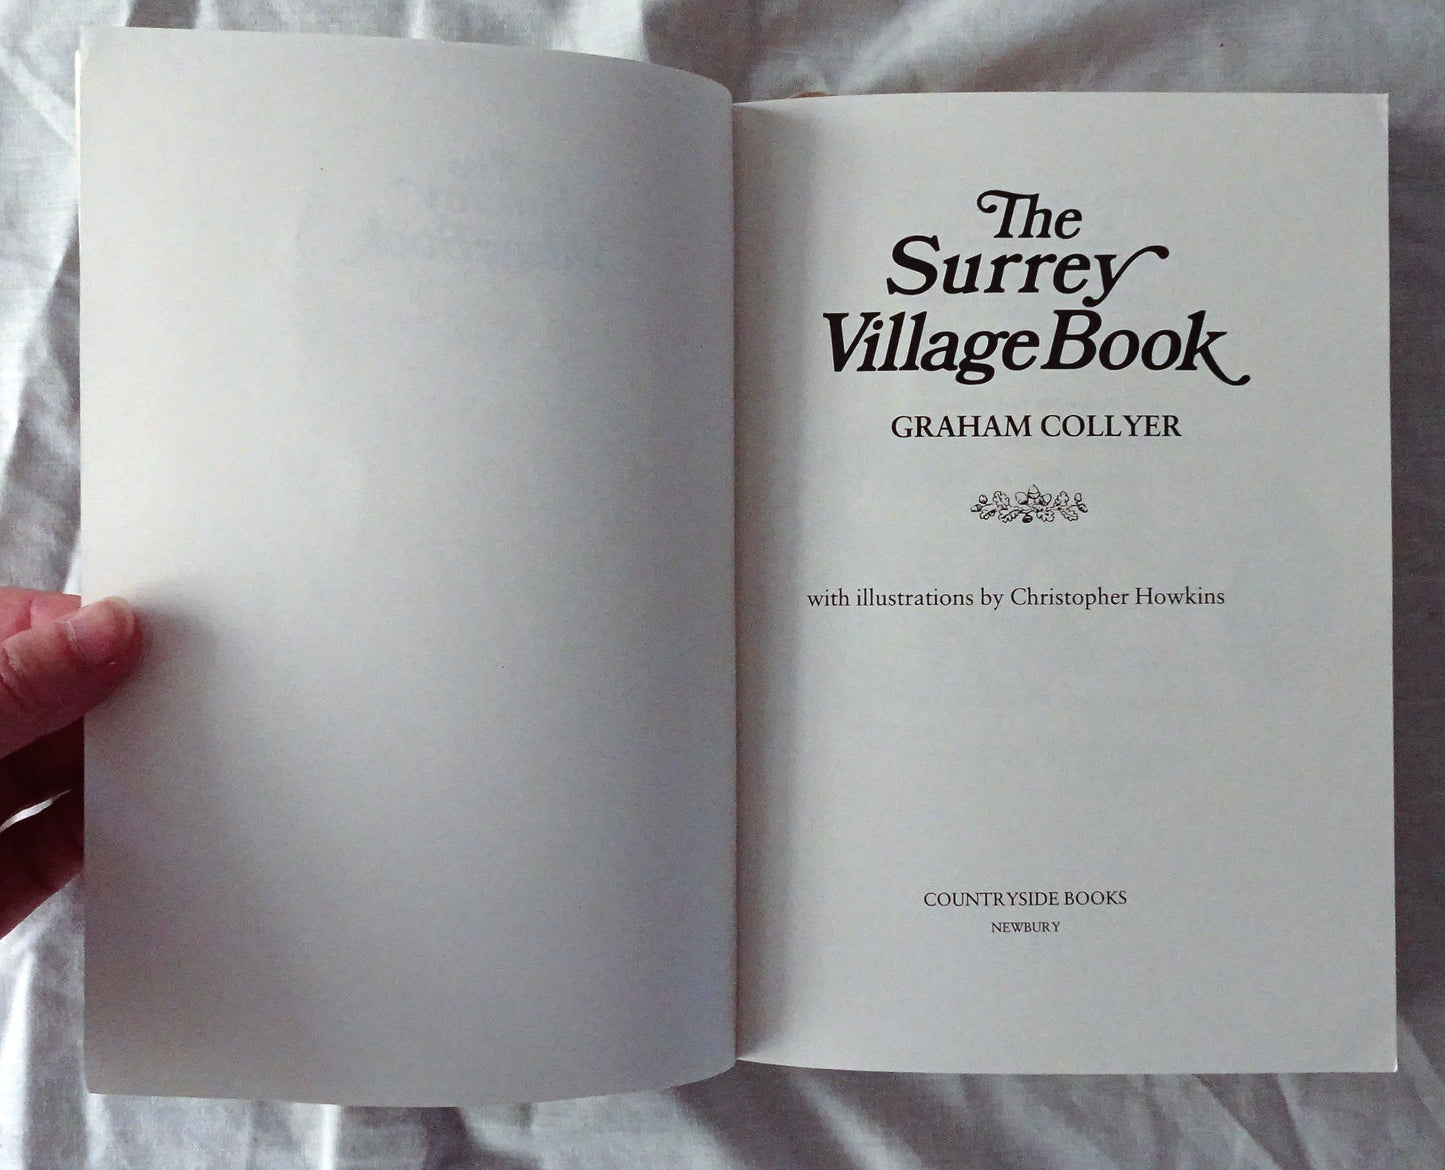 The Surrey Village Book by Graham Collyer